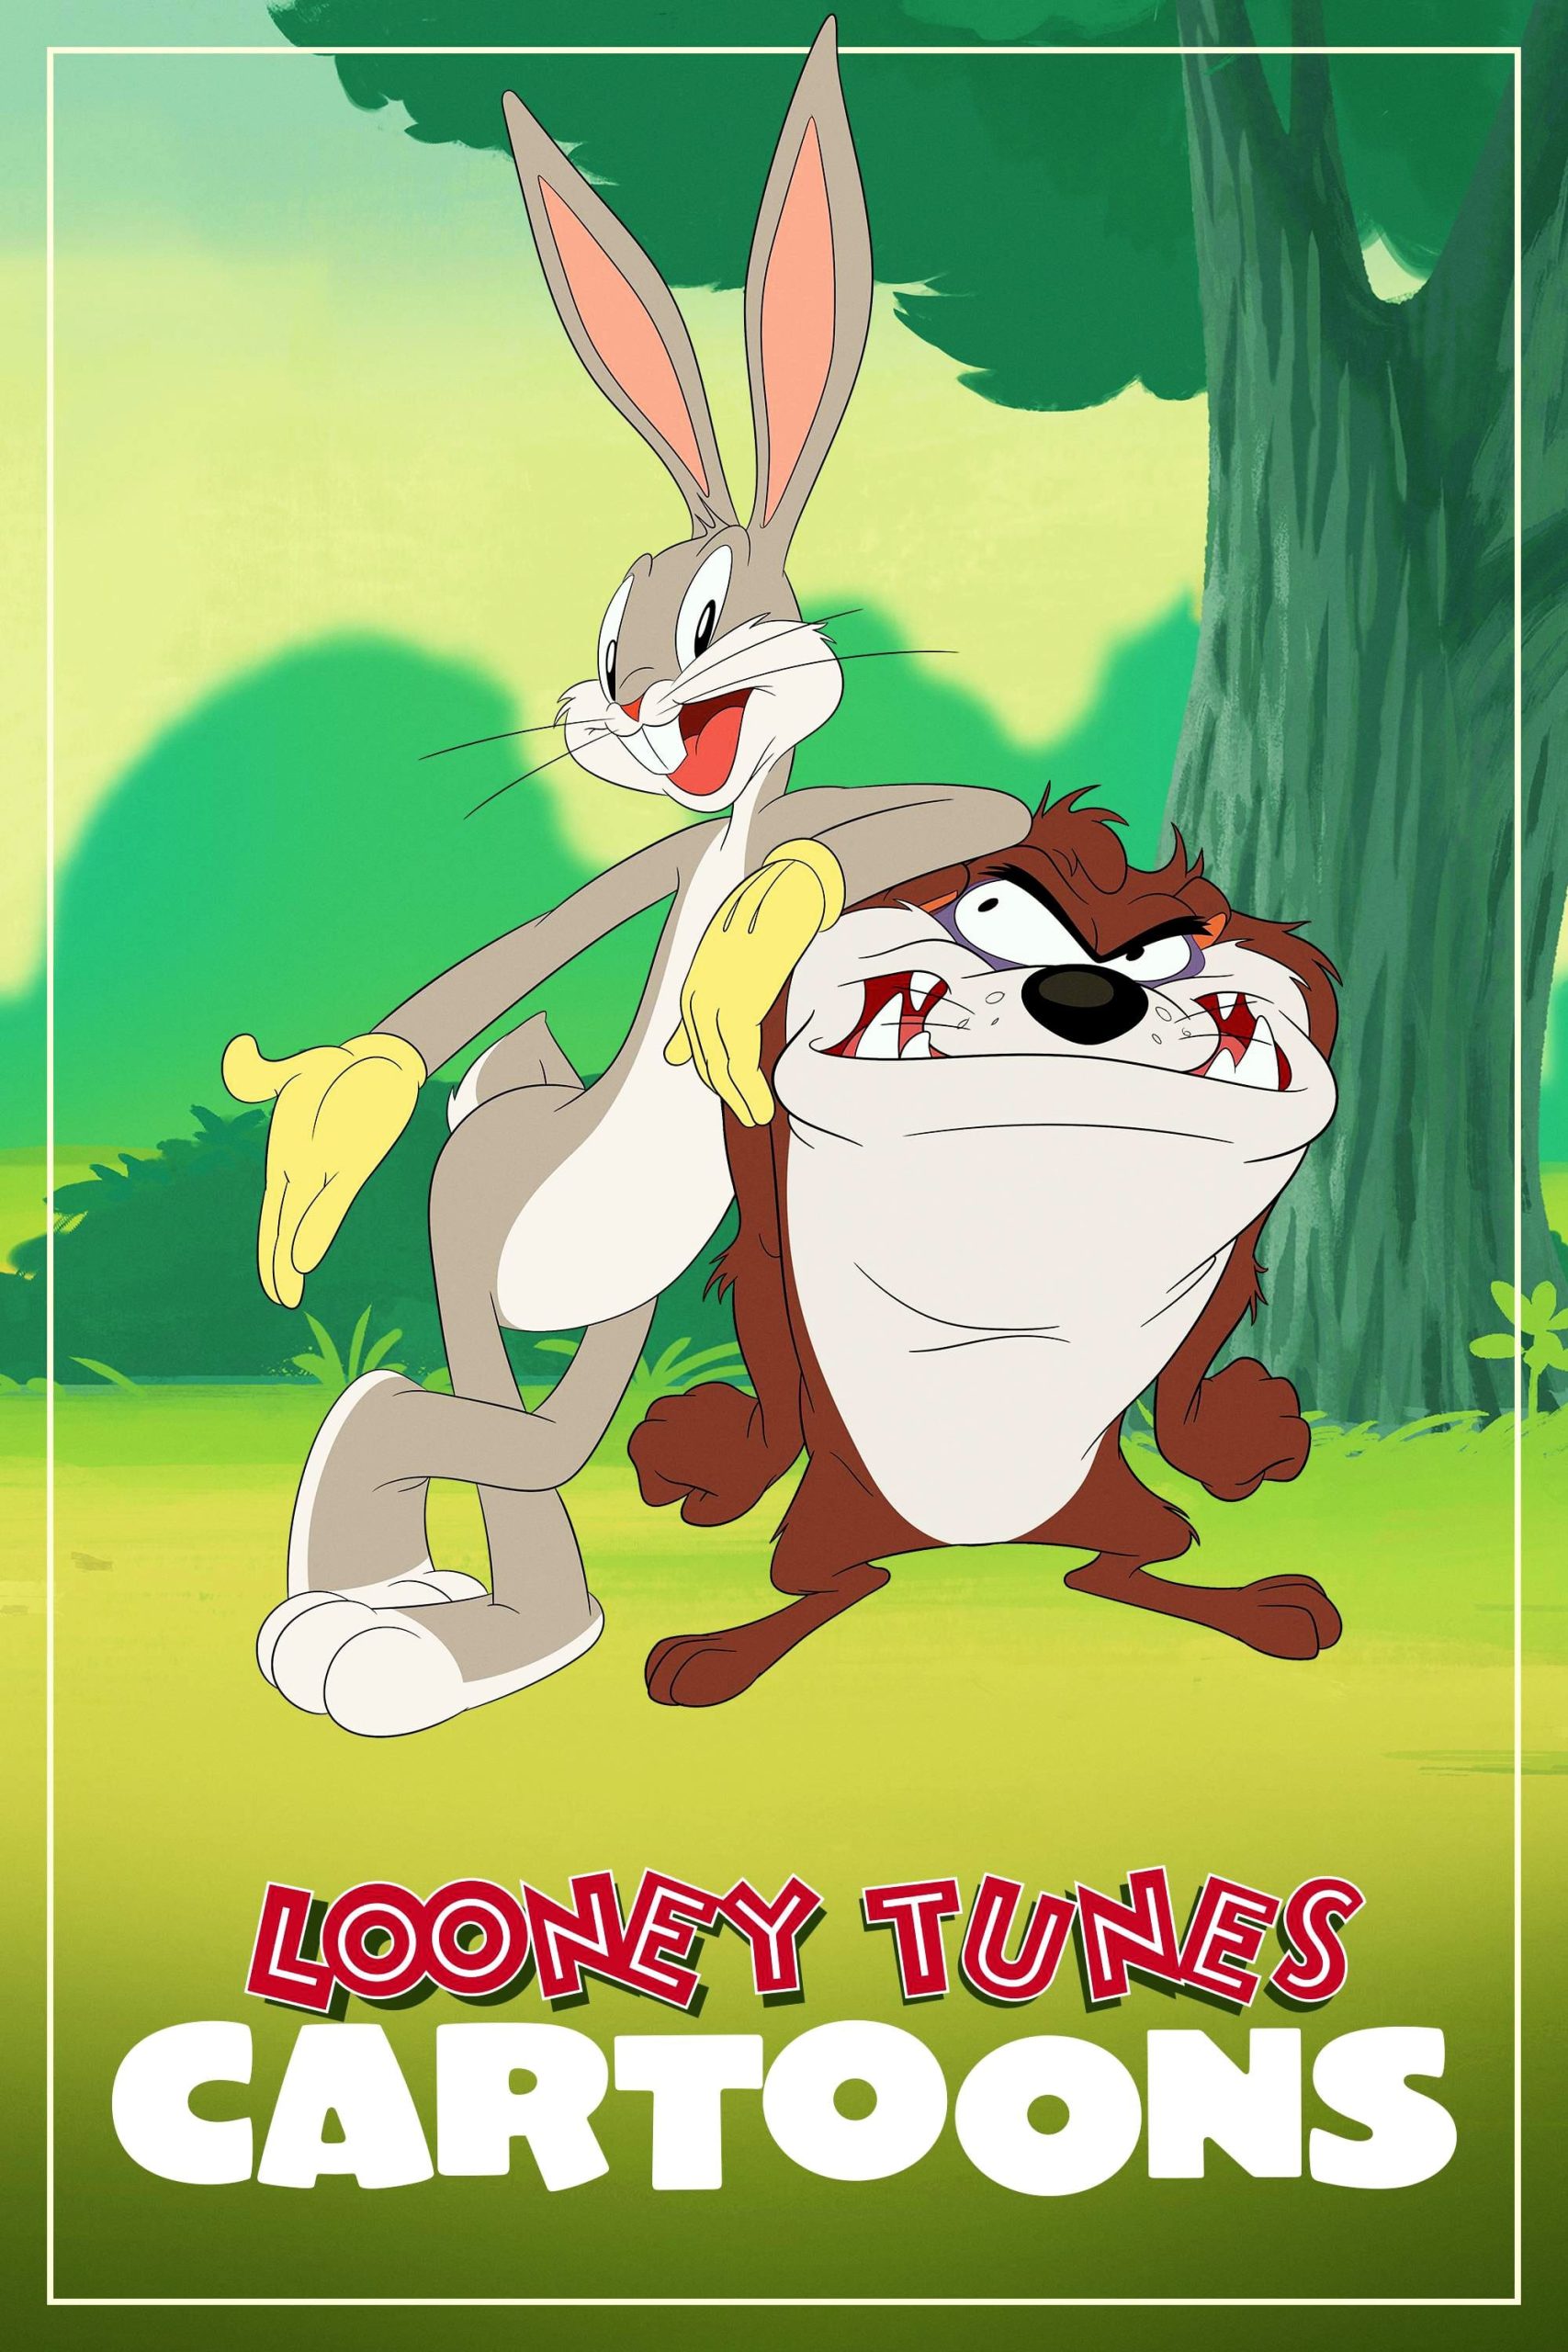 دانلود سریال Looney Tunes Cartoons (کارتون های لونی تونز)